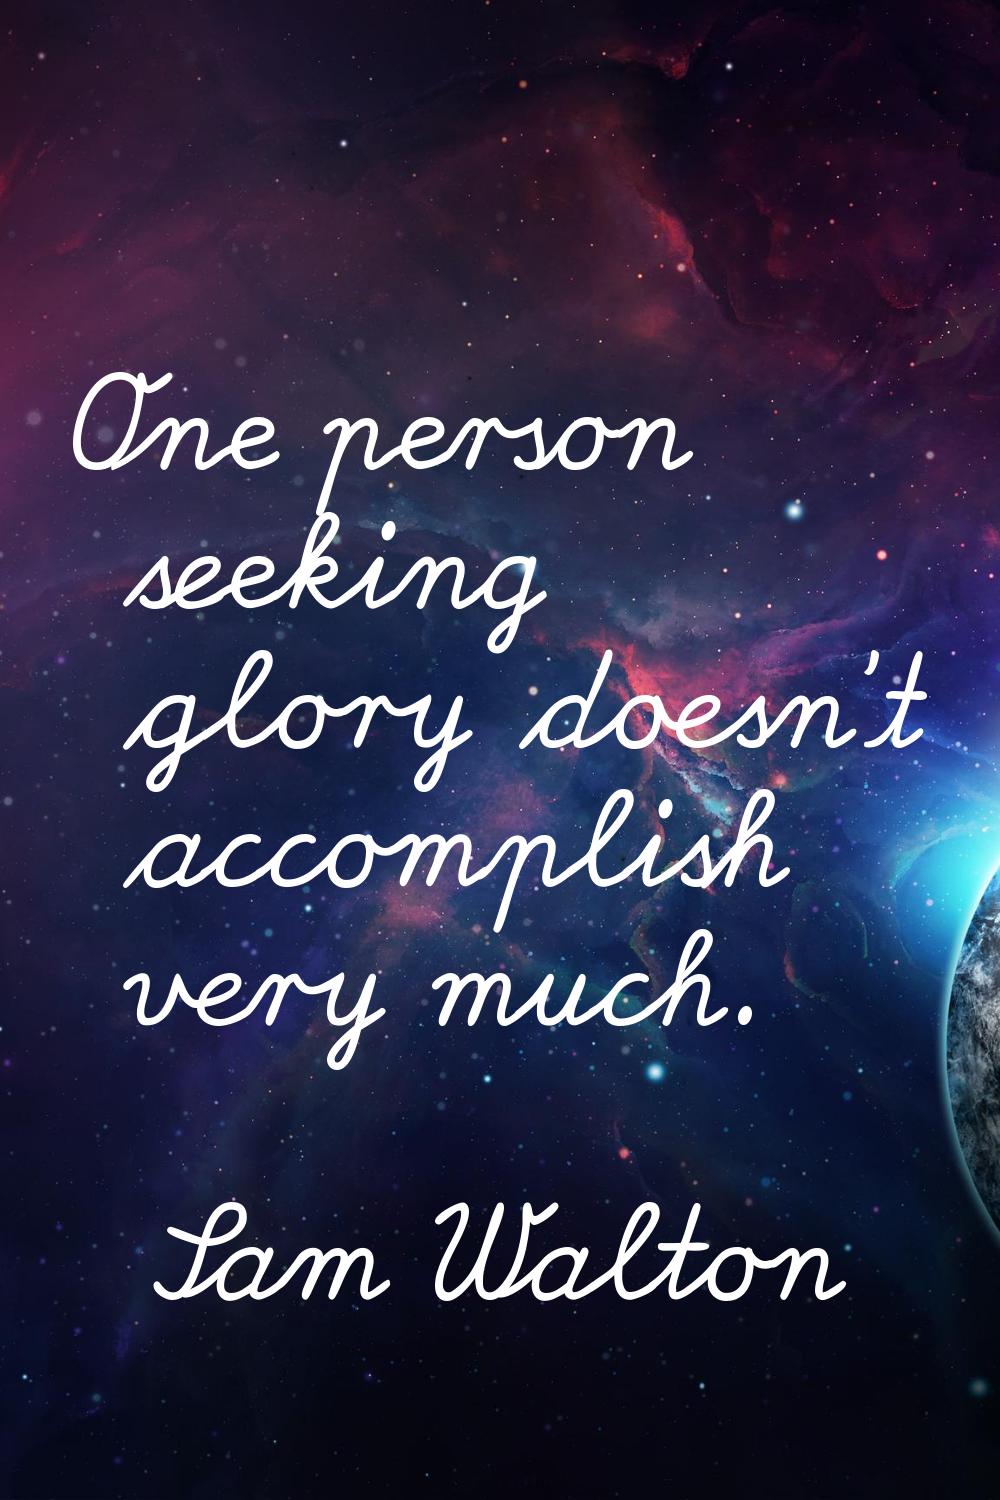 One person seeking glory doesn't accomplish very much.